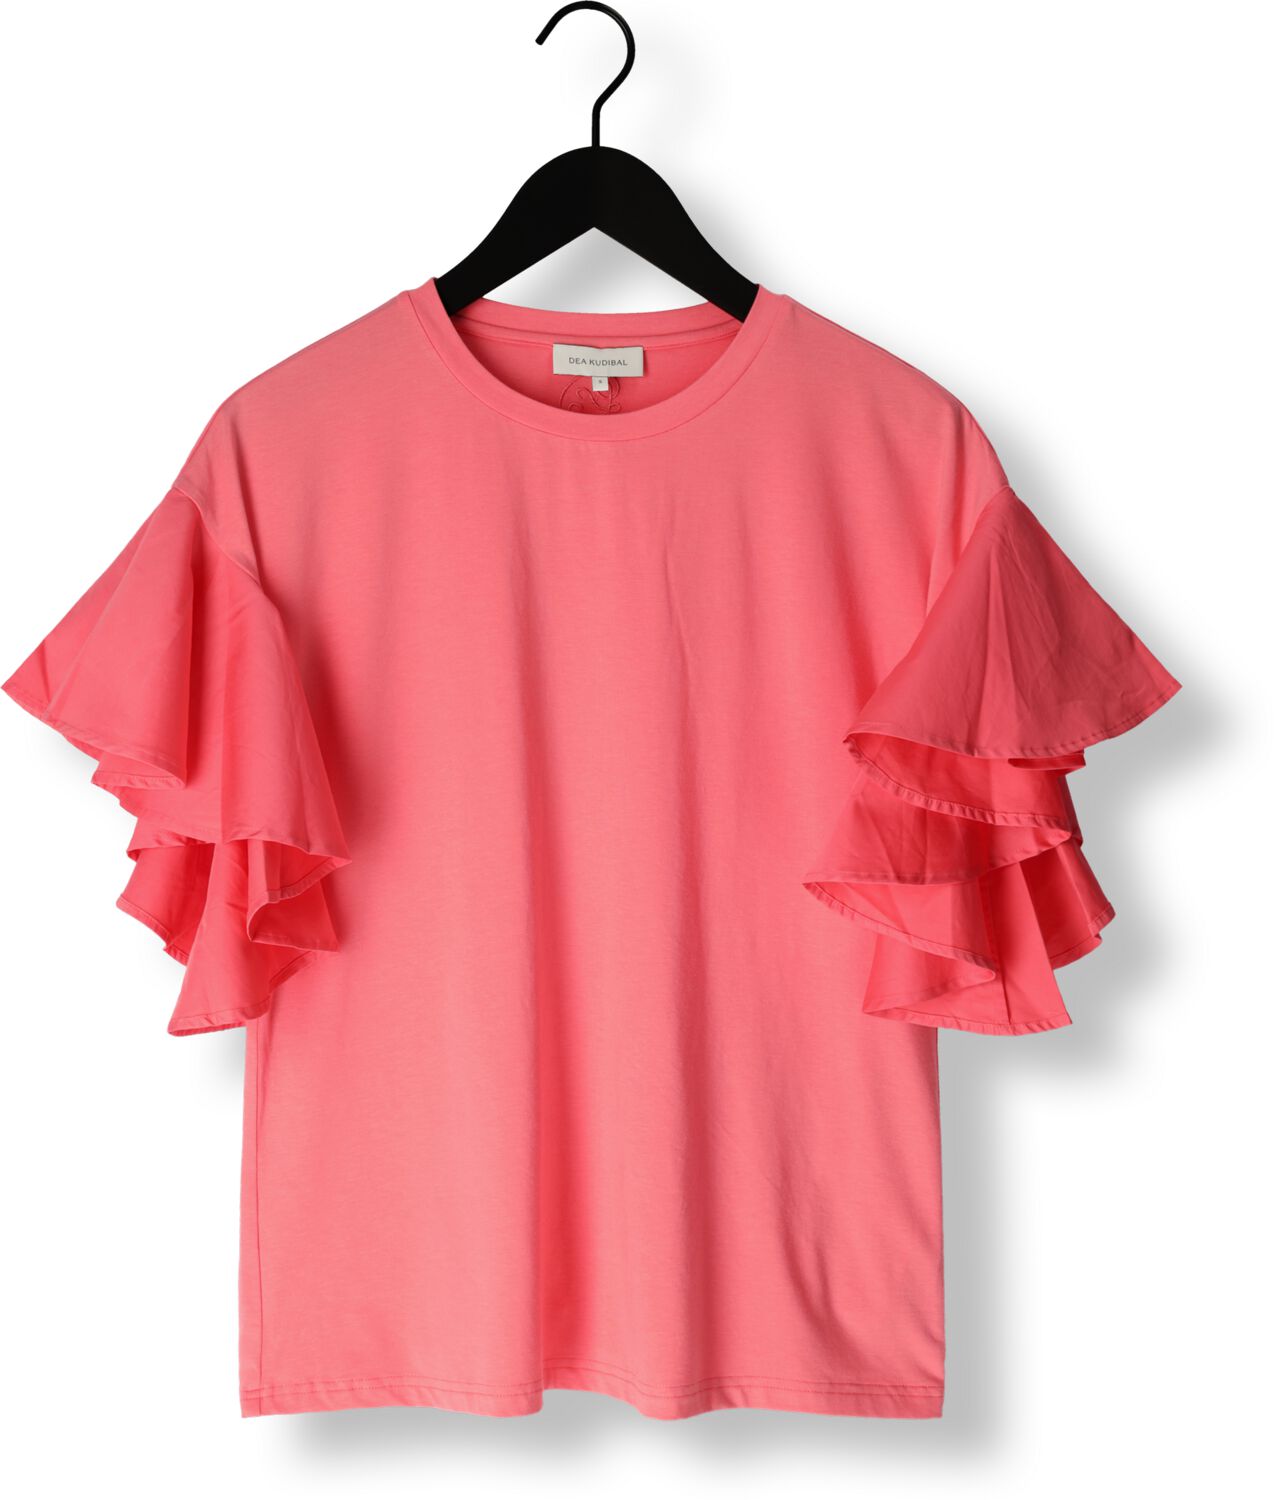 DEA KUDIBAL Dames Tops & T-shirts Jenthy Roze